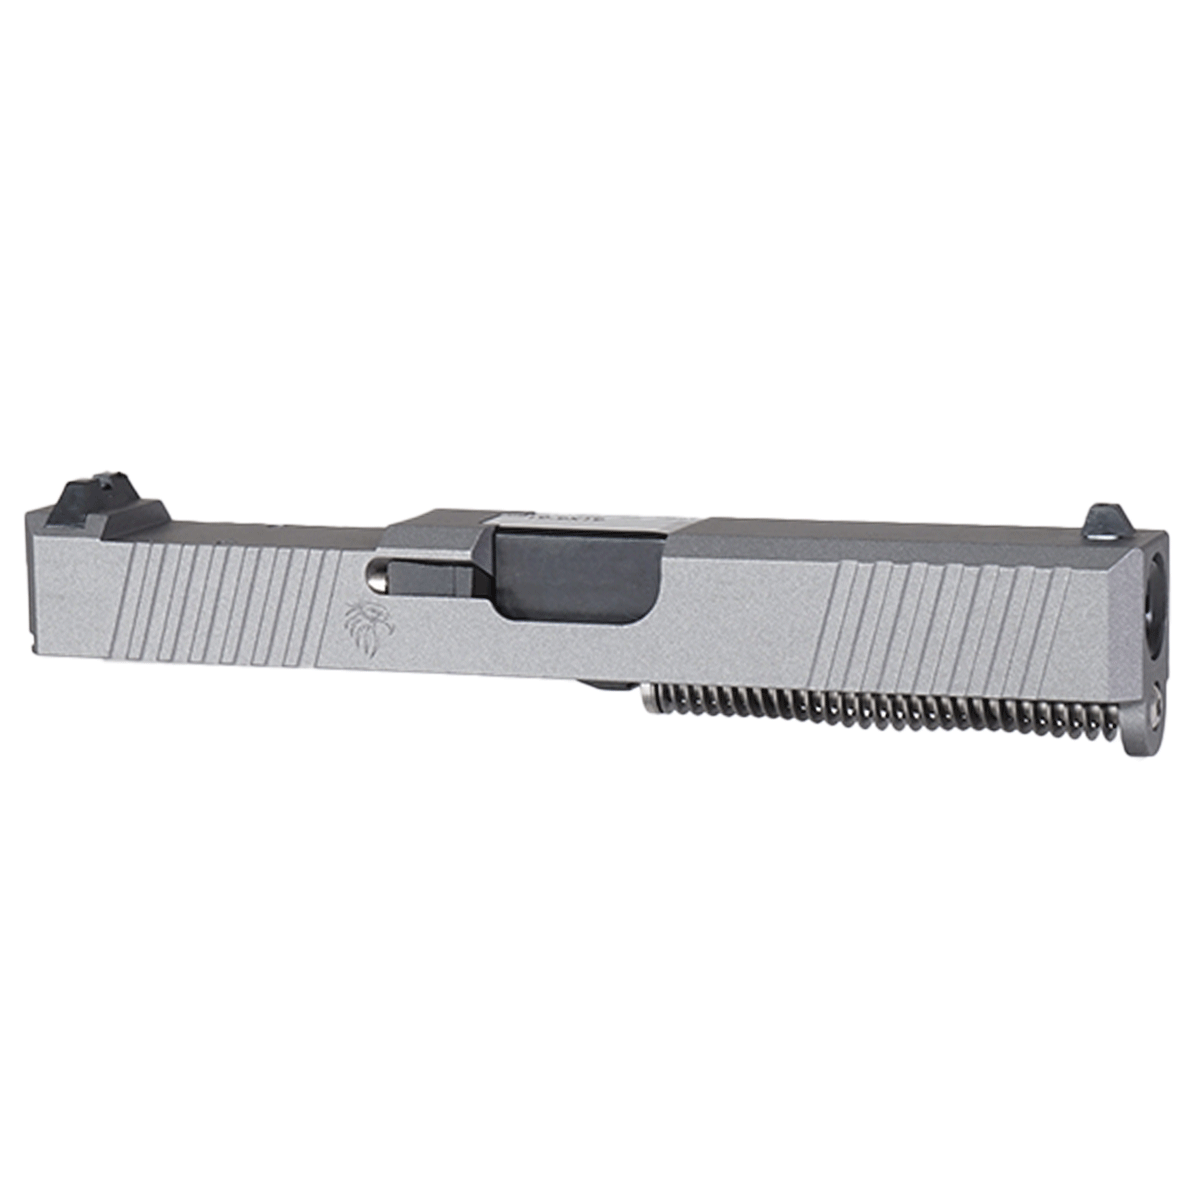 OTD 'Harpoon' 9mm Complete Slide Kit - Glock 19 Gen 1-3 Compatible